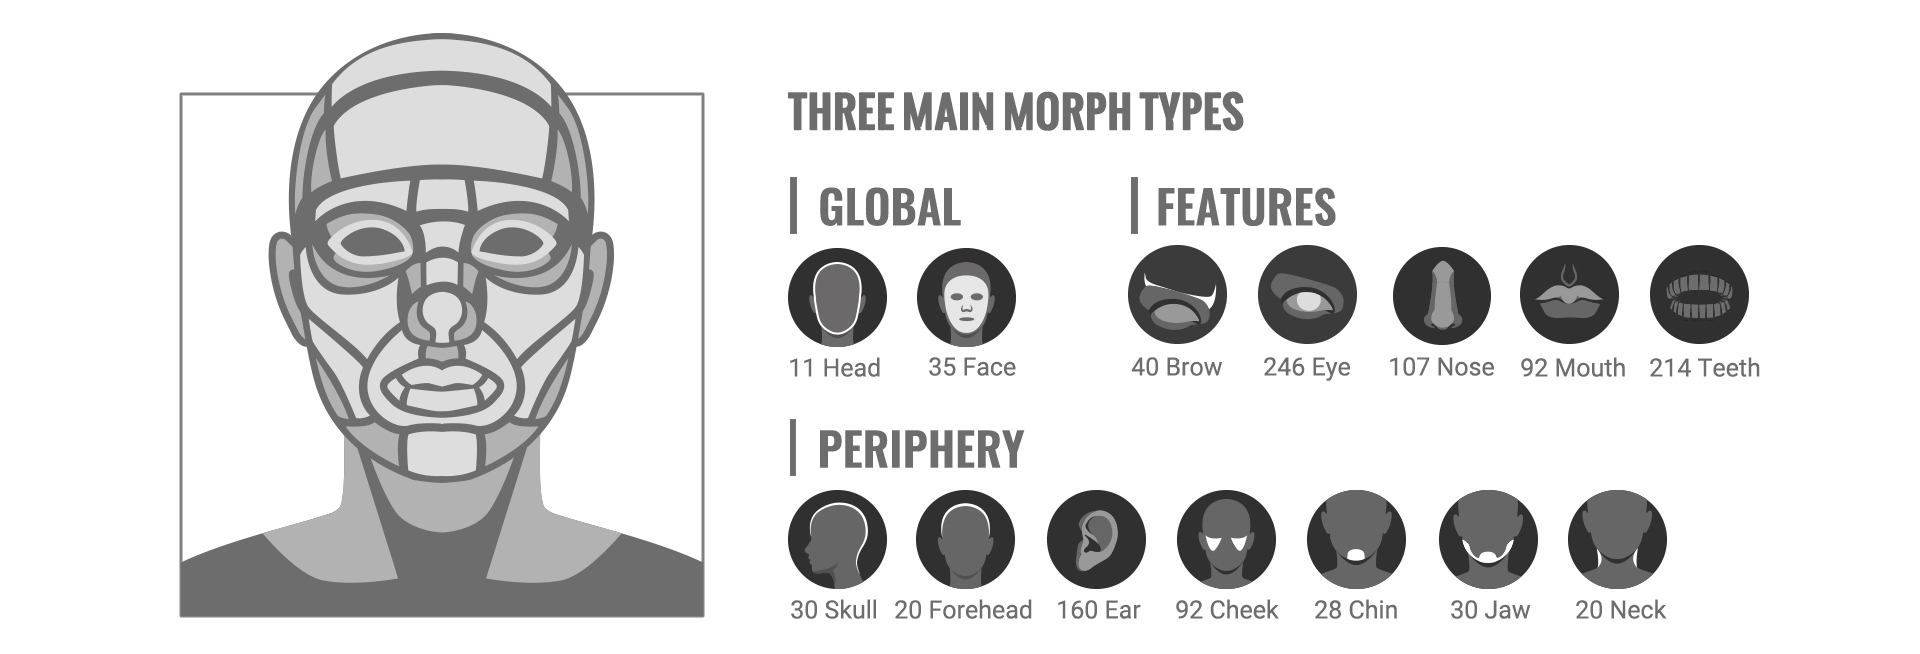 Three Main Morph Types